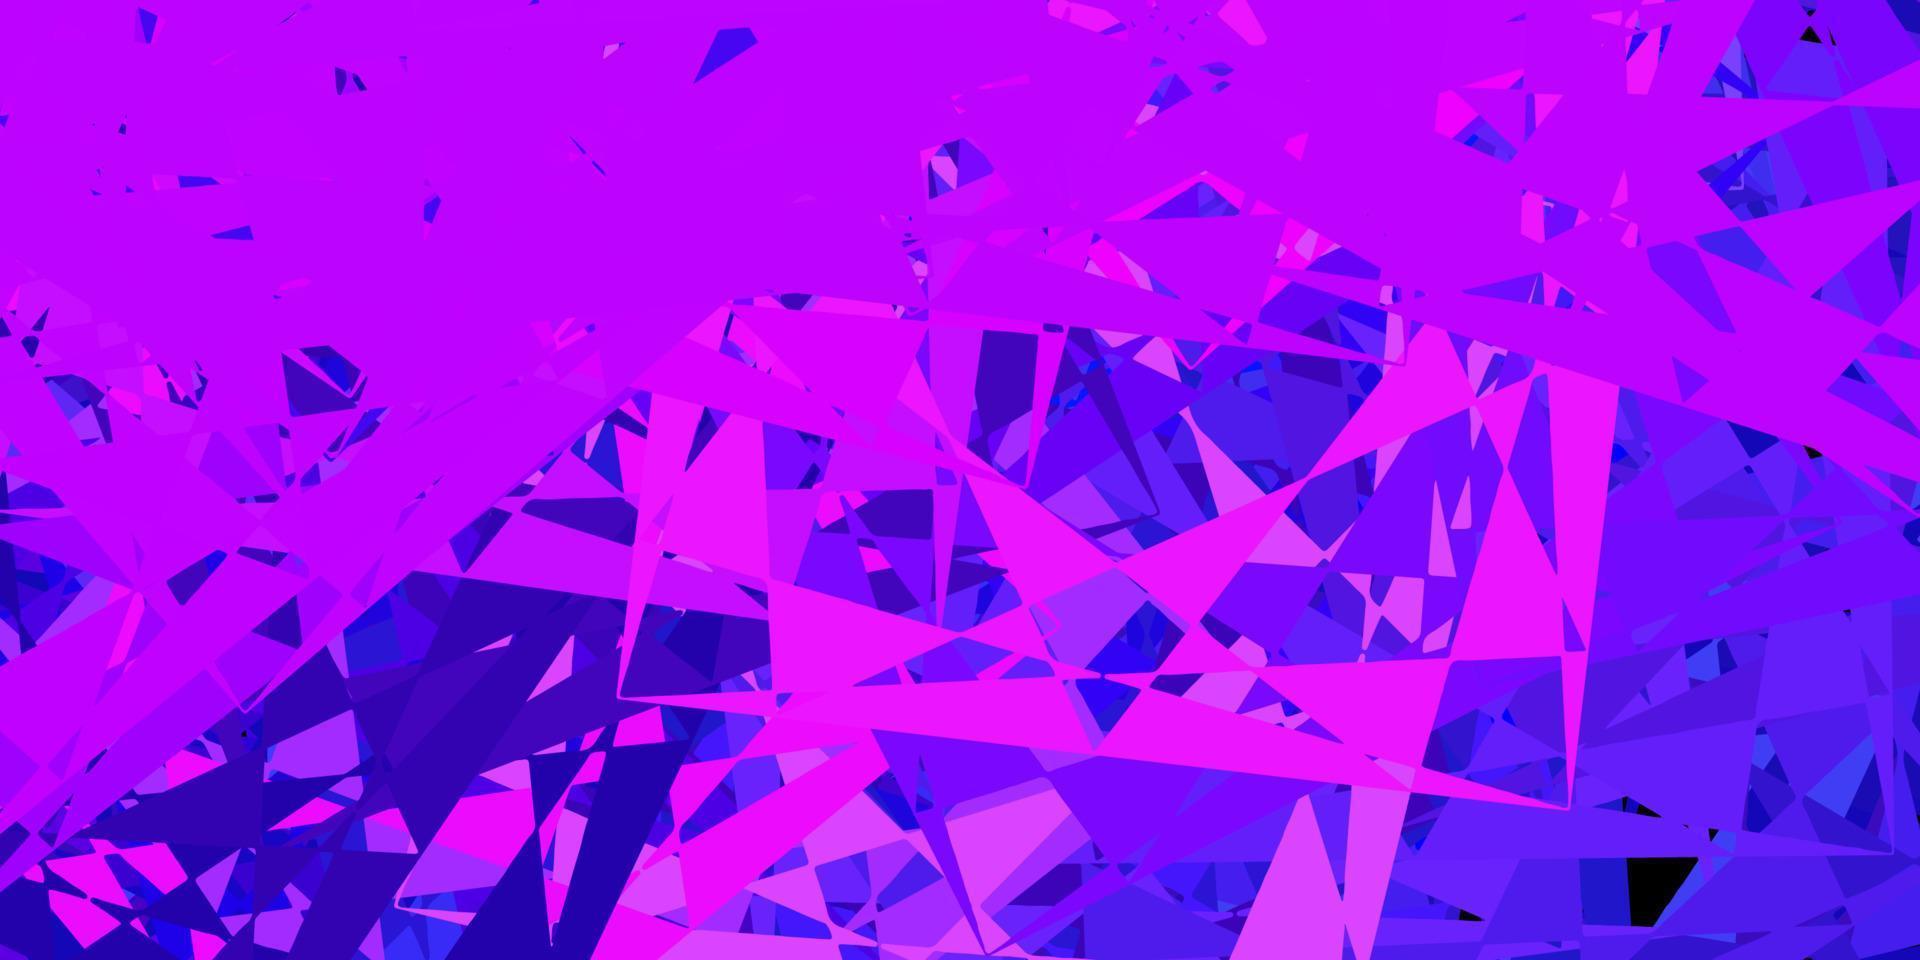 textura de vector púrpura, rosa oscuro con triángulos al azar.